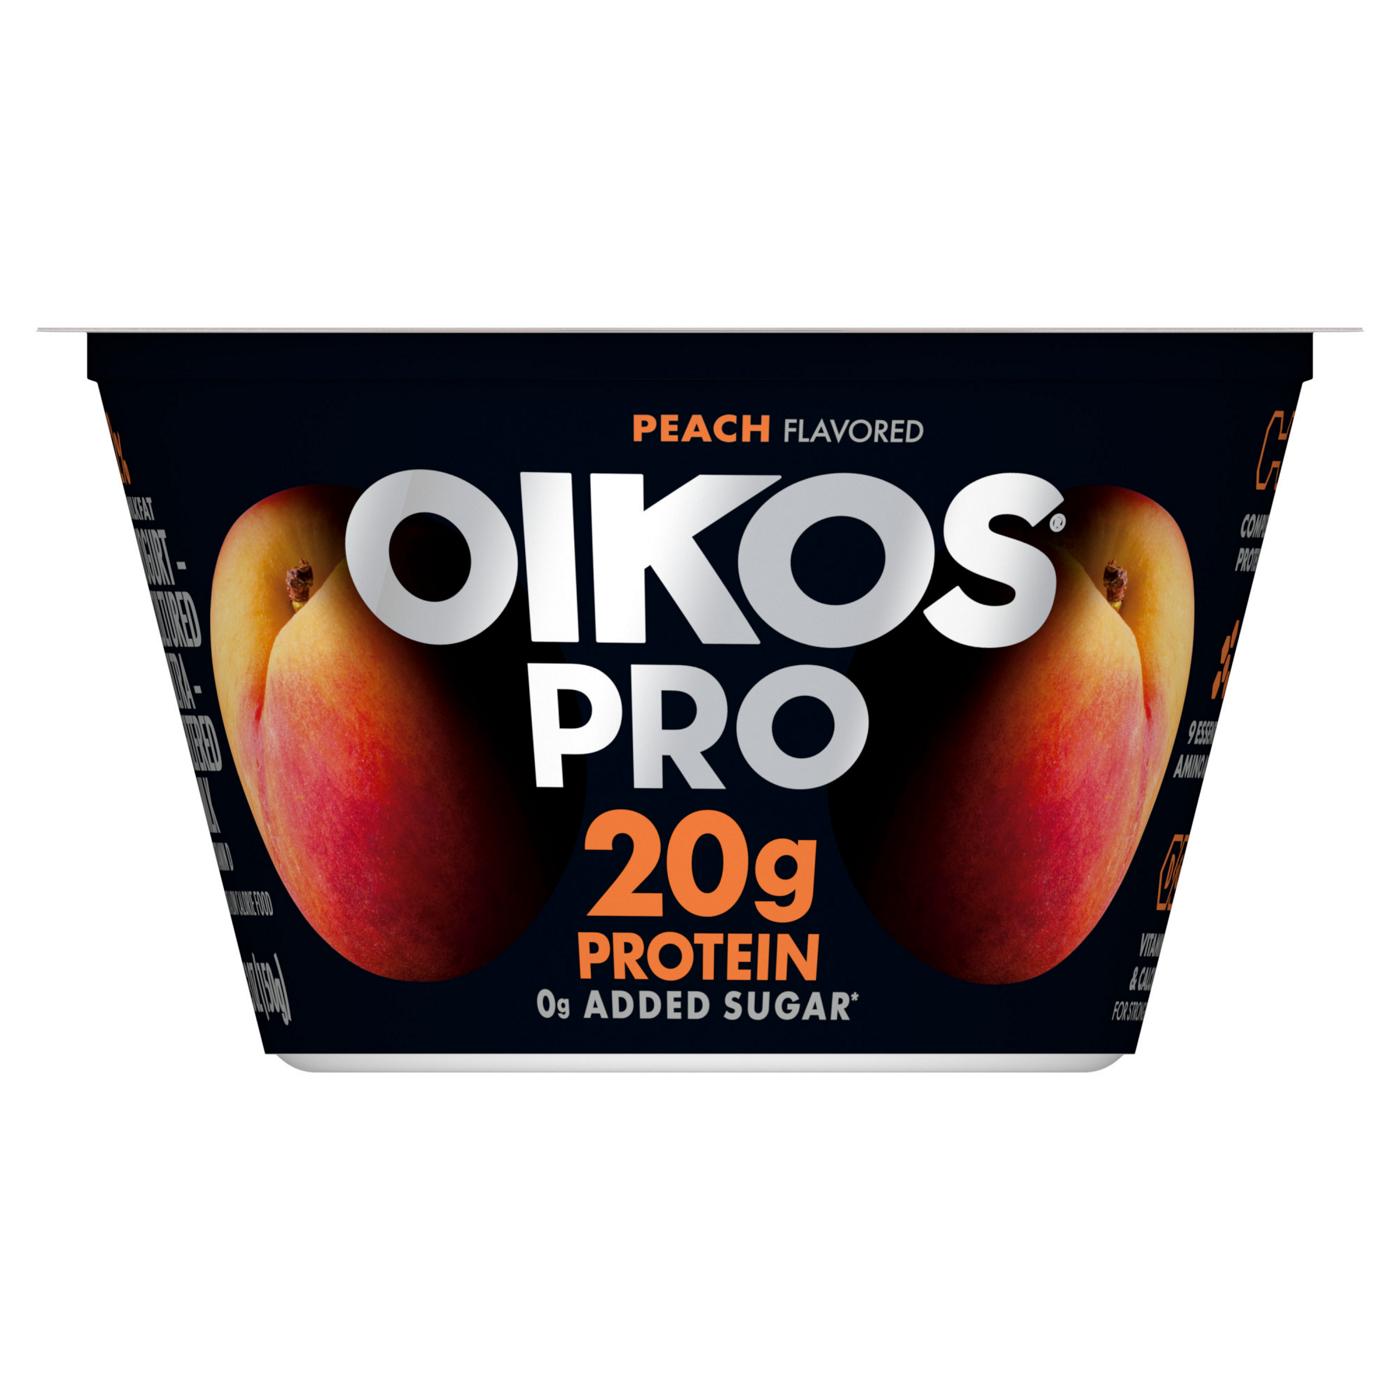 Oikos Pro 20g Protein Greek Yogurt Peach; image 1 of 2